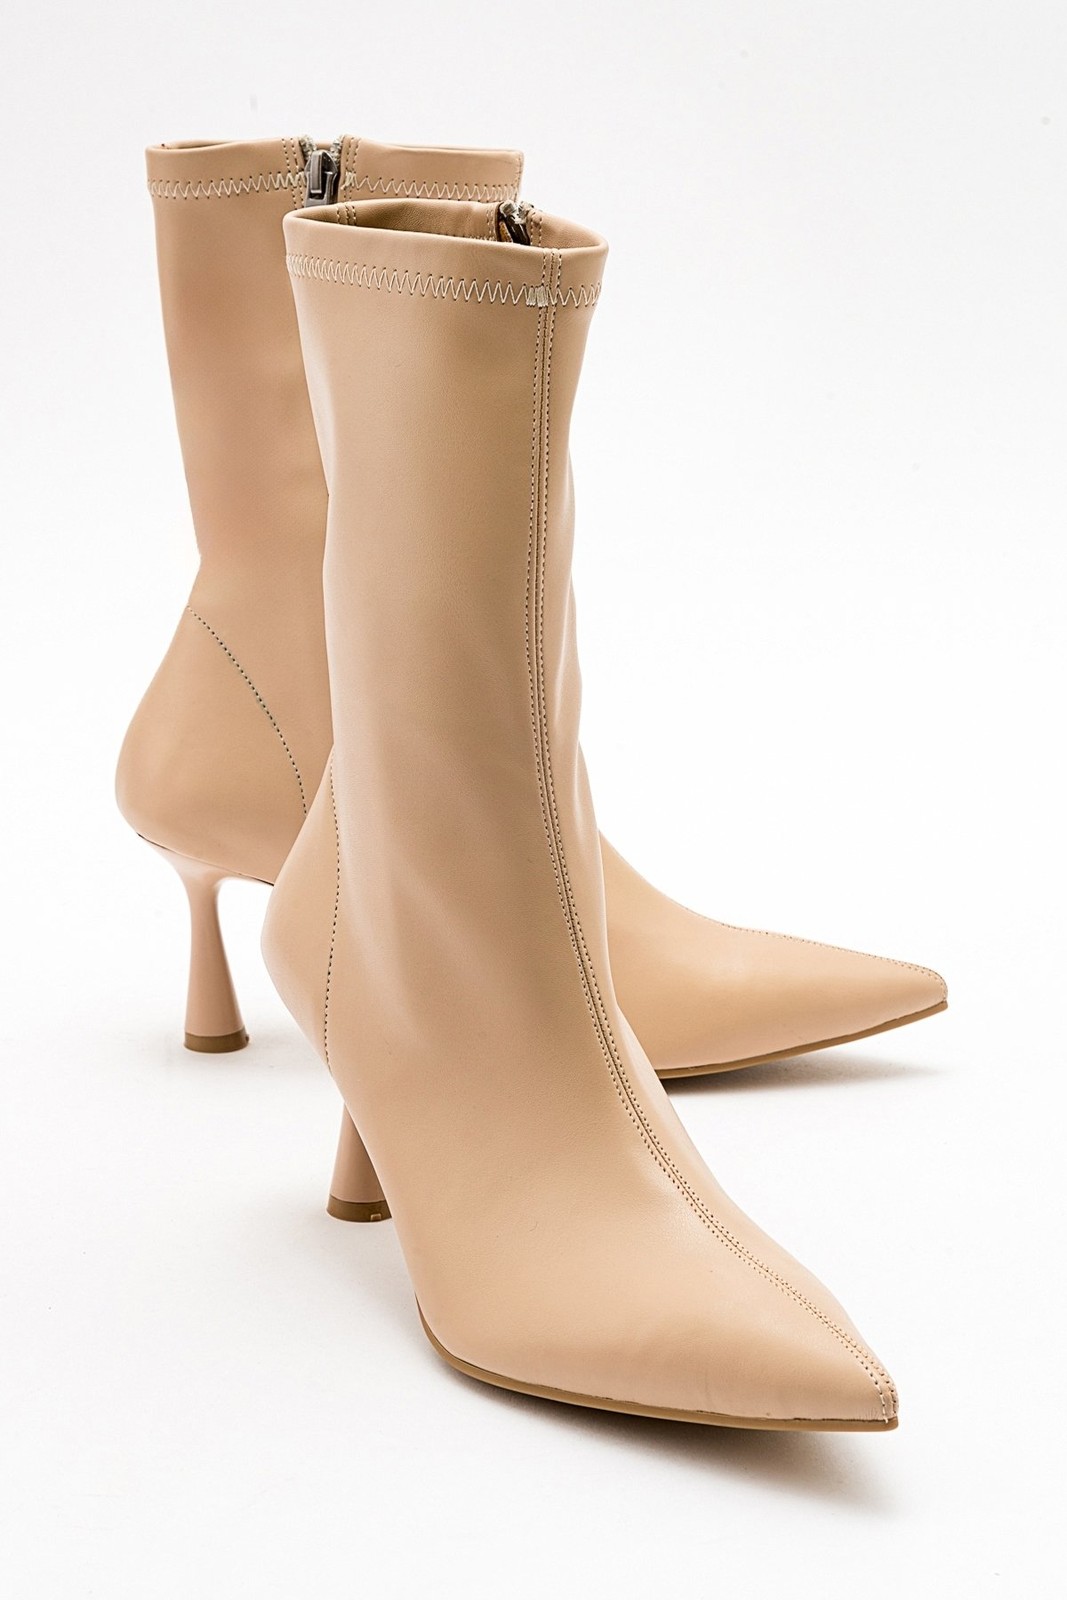 LuviShoes SPEZIA Women's Beige Stretch Heeled Boots